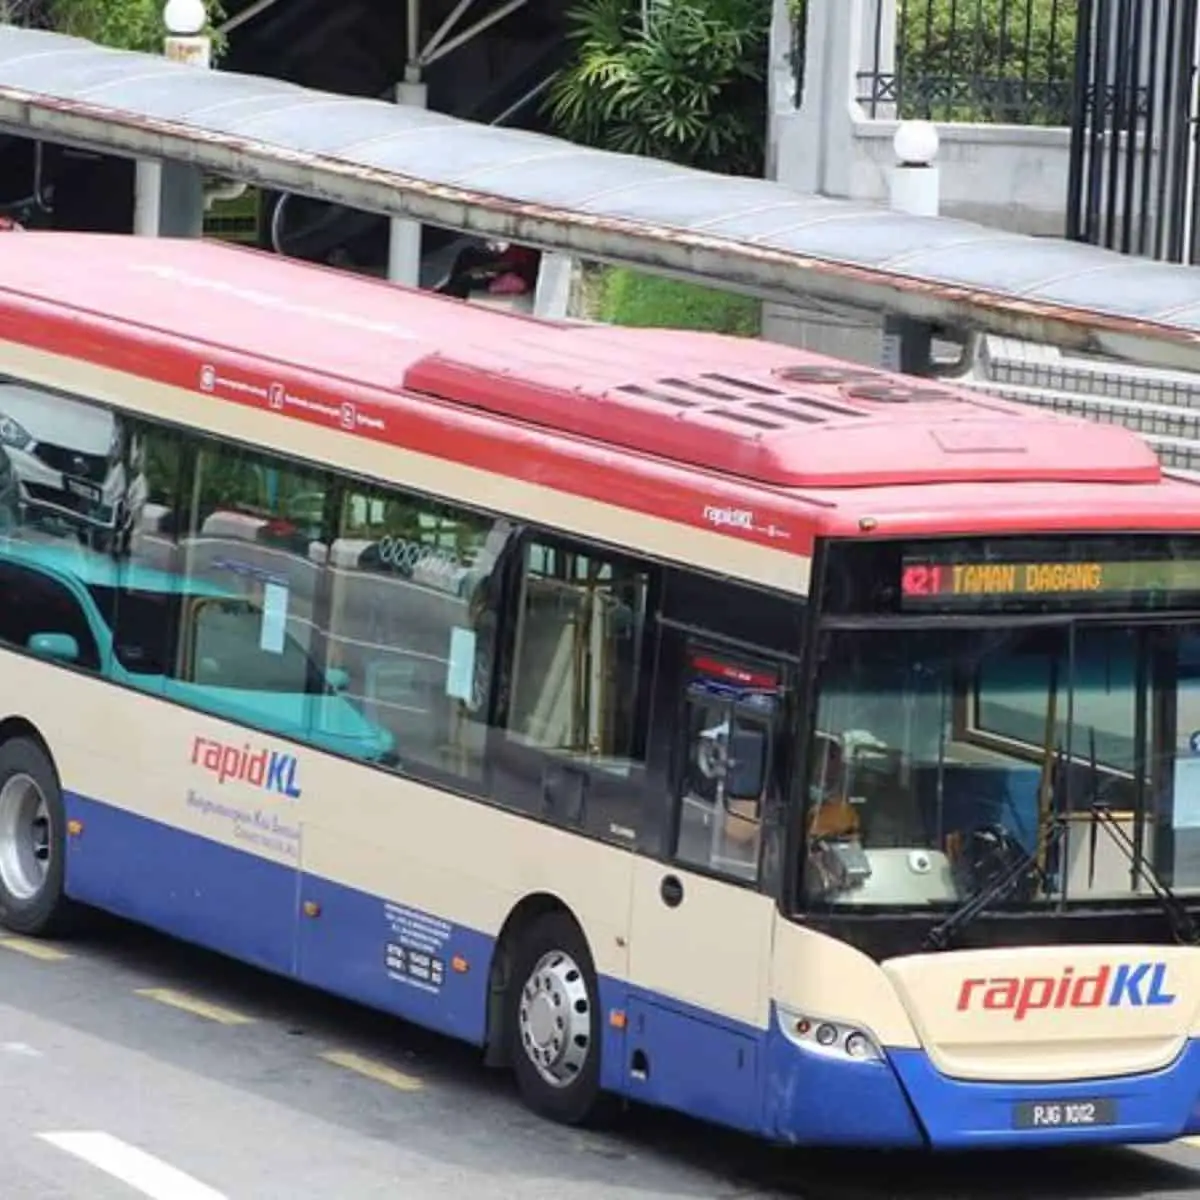 Rapid KL bus travelling from Kuala Lumpur to Penang